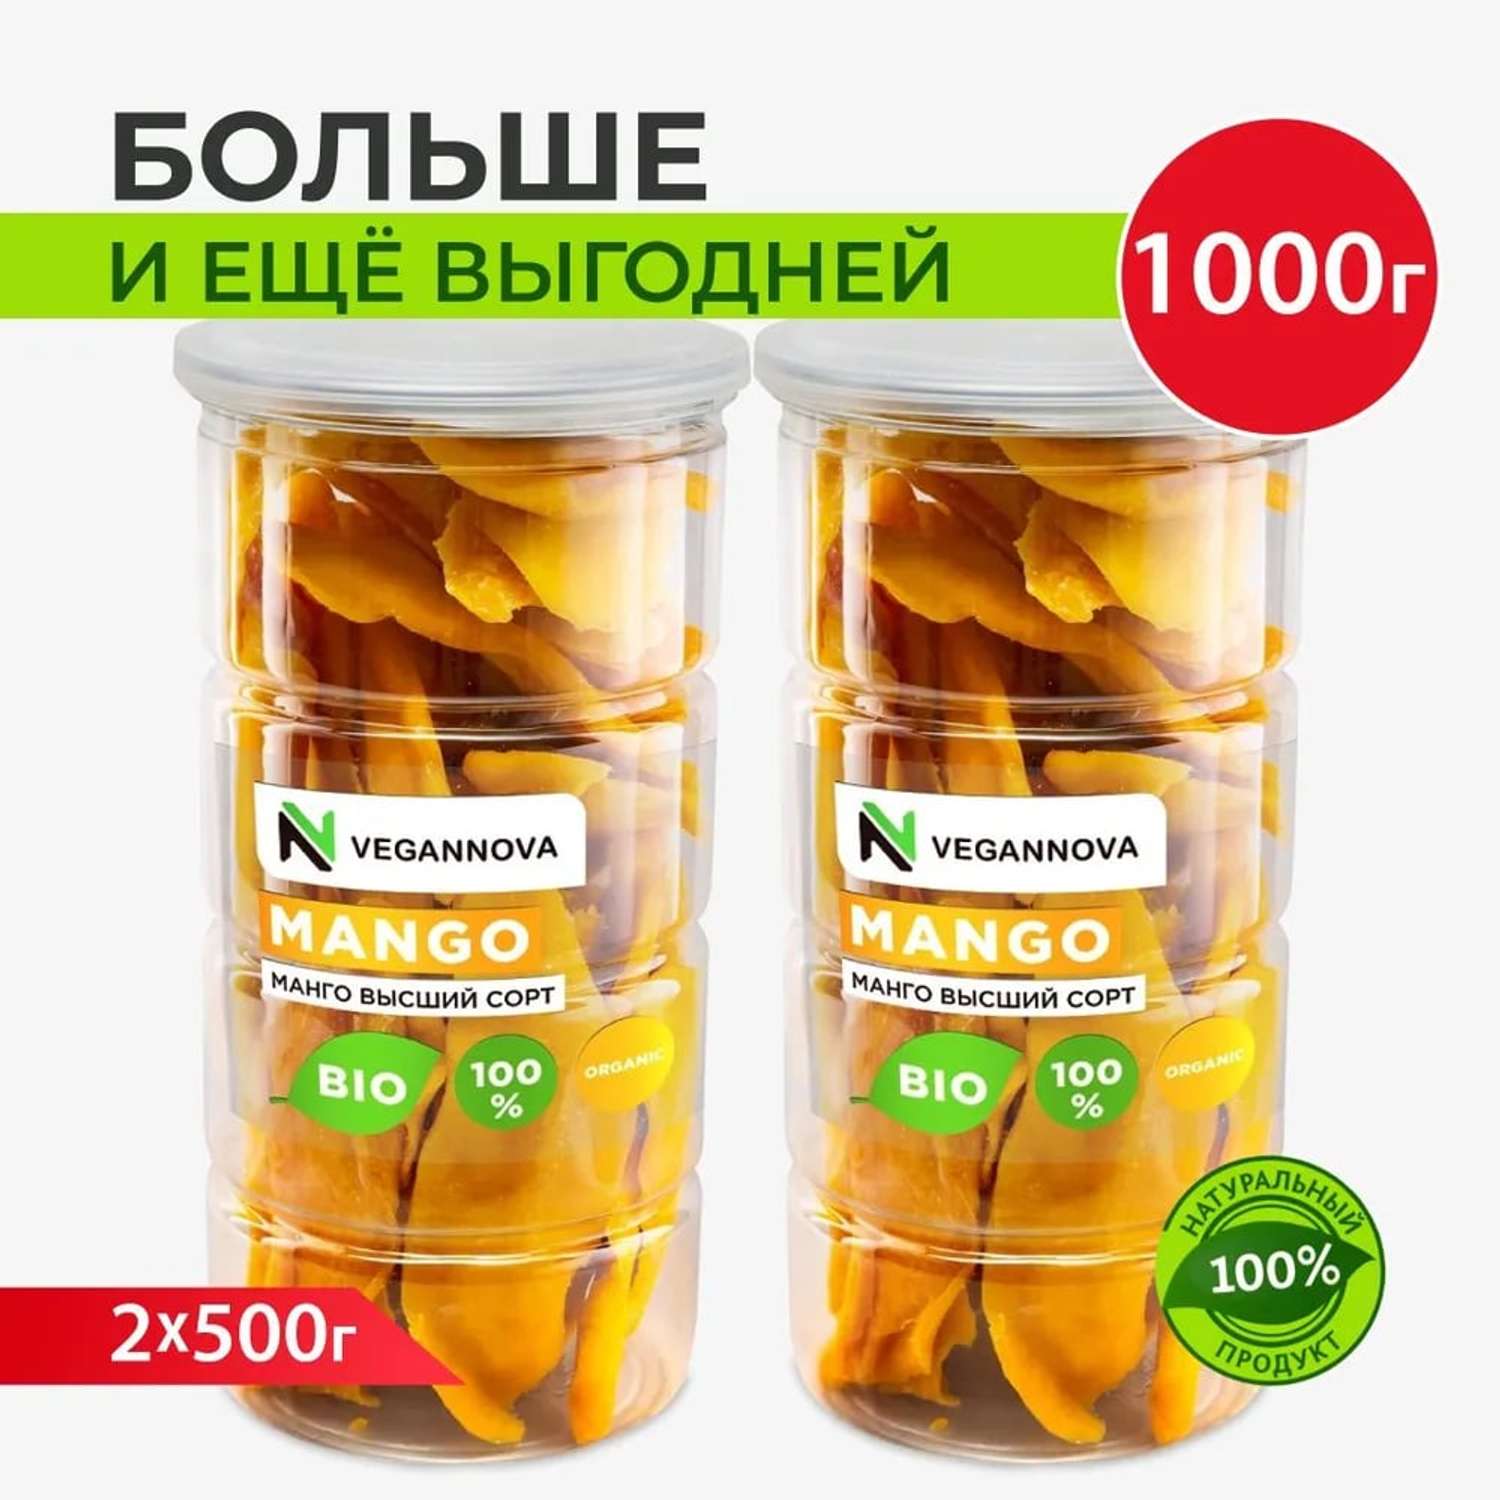 Манго сушеное VeganNova без сахара вяленое 100% натуральное 1000 г 2 шт по 500 г - фото 1